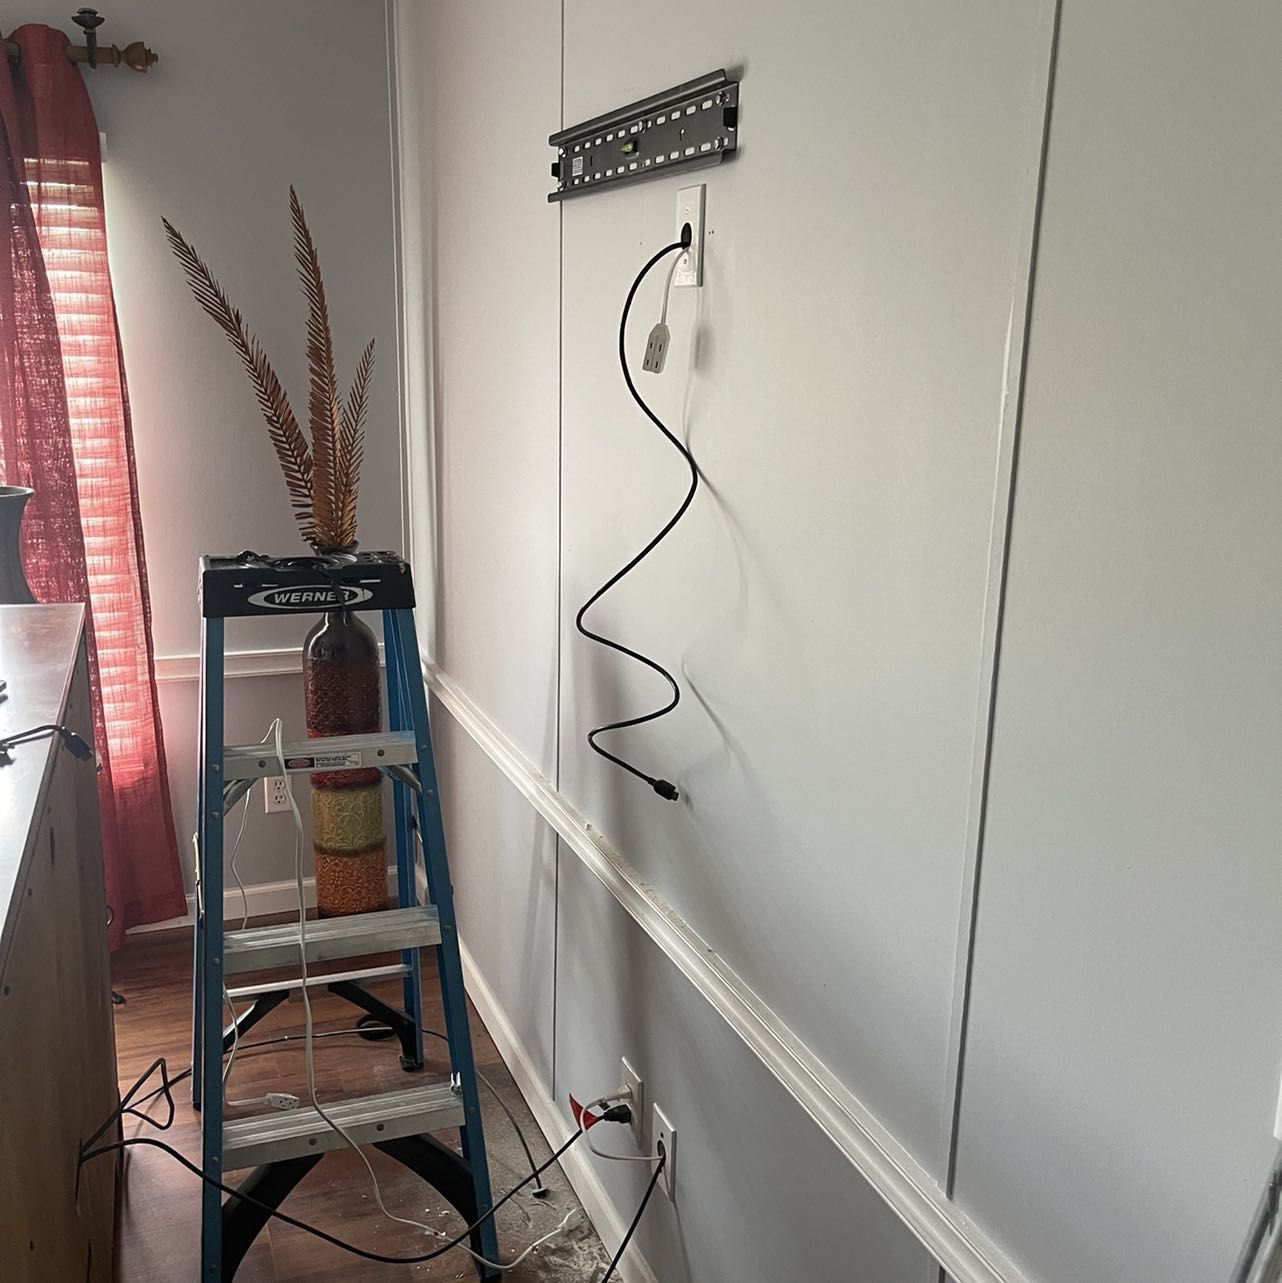 No cords/ Cables in wall portfolio